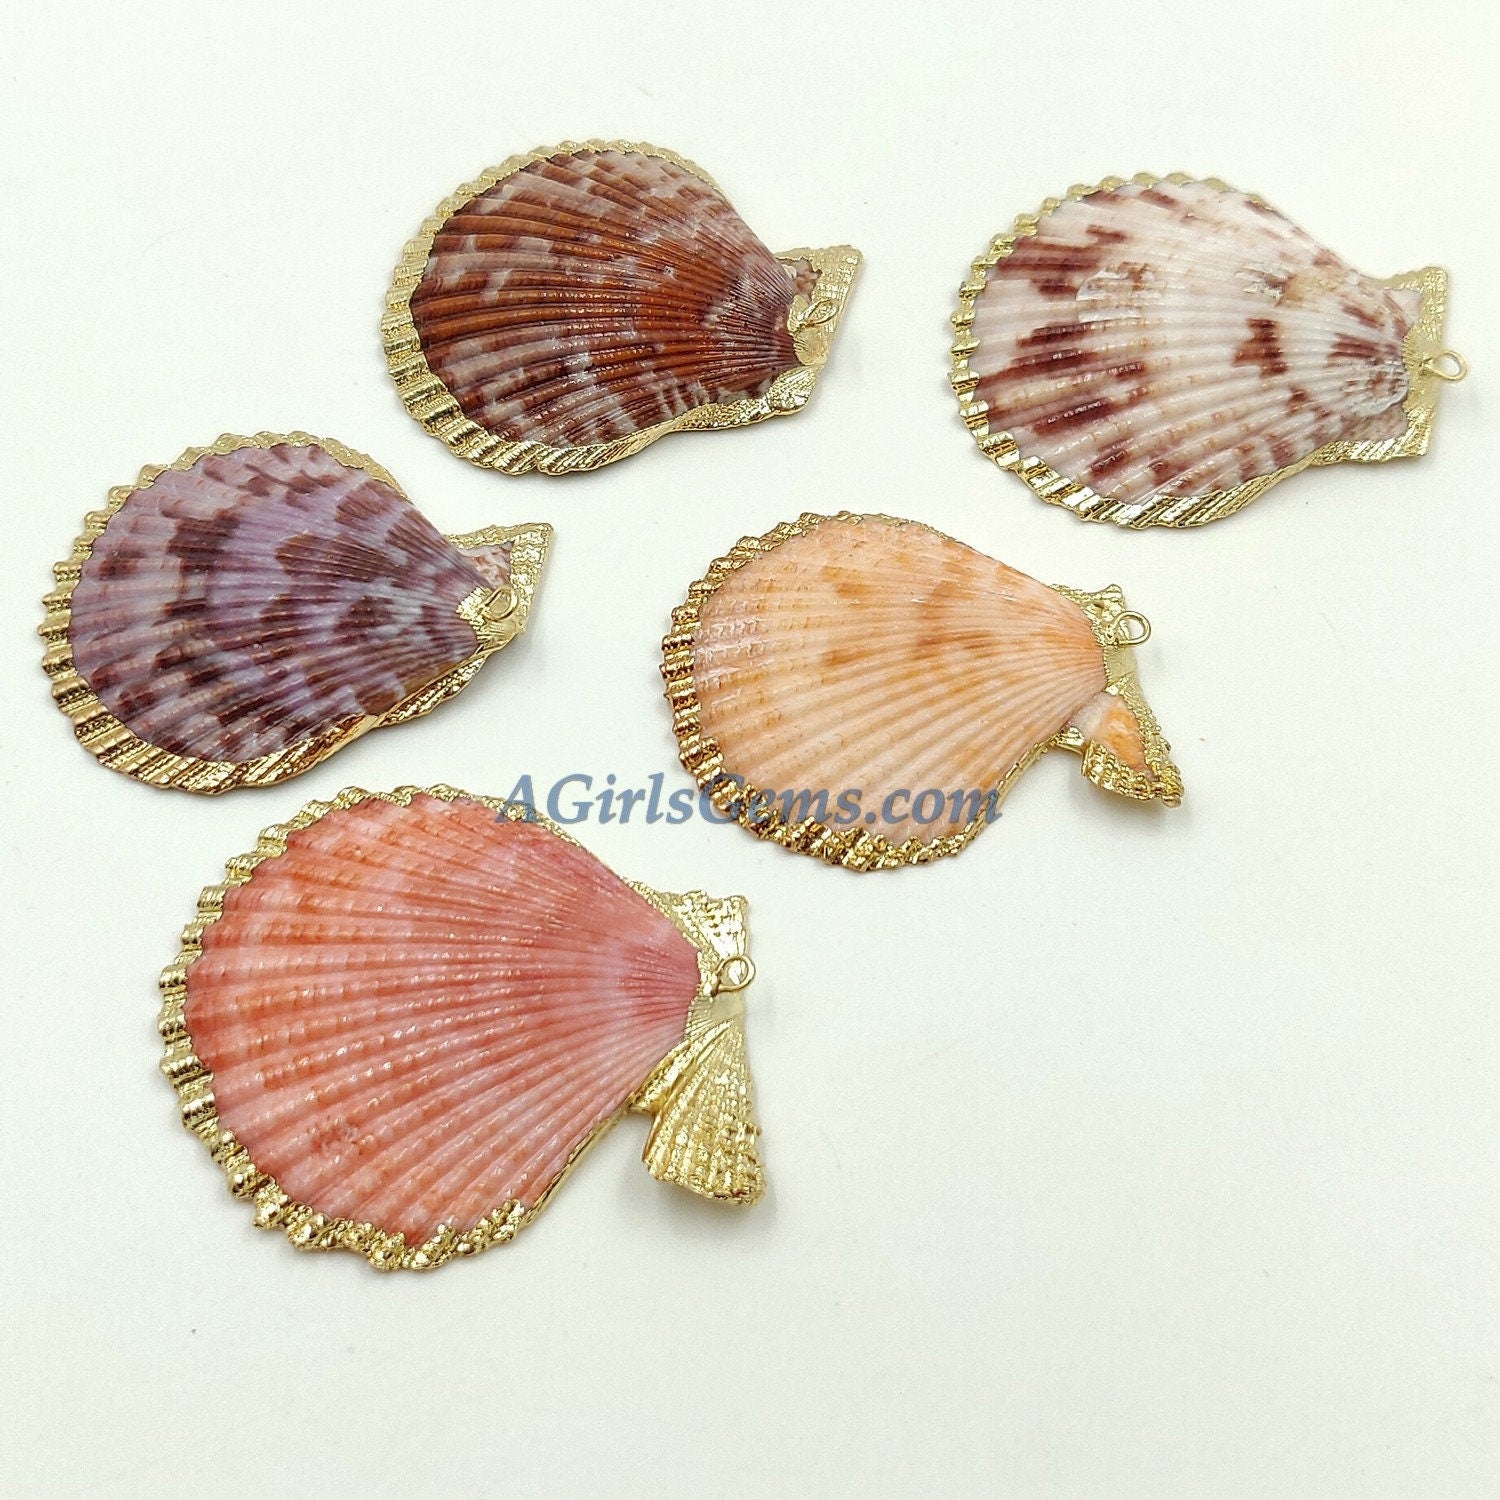 Large Seashell, Gold Edge Seashell Pendants, Beach Scallop Natural Shell Pendants, Gold Dipped, Gilded Jewelry Boho Style Supplies Bulk - A Girls Gems